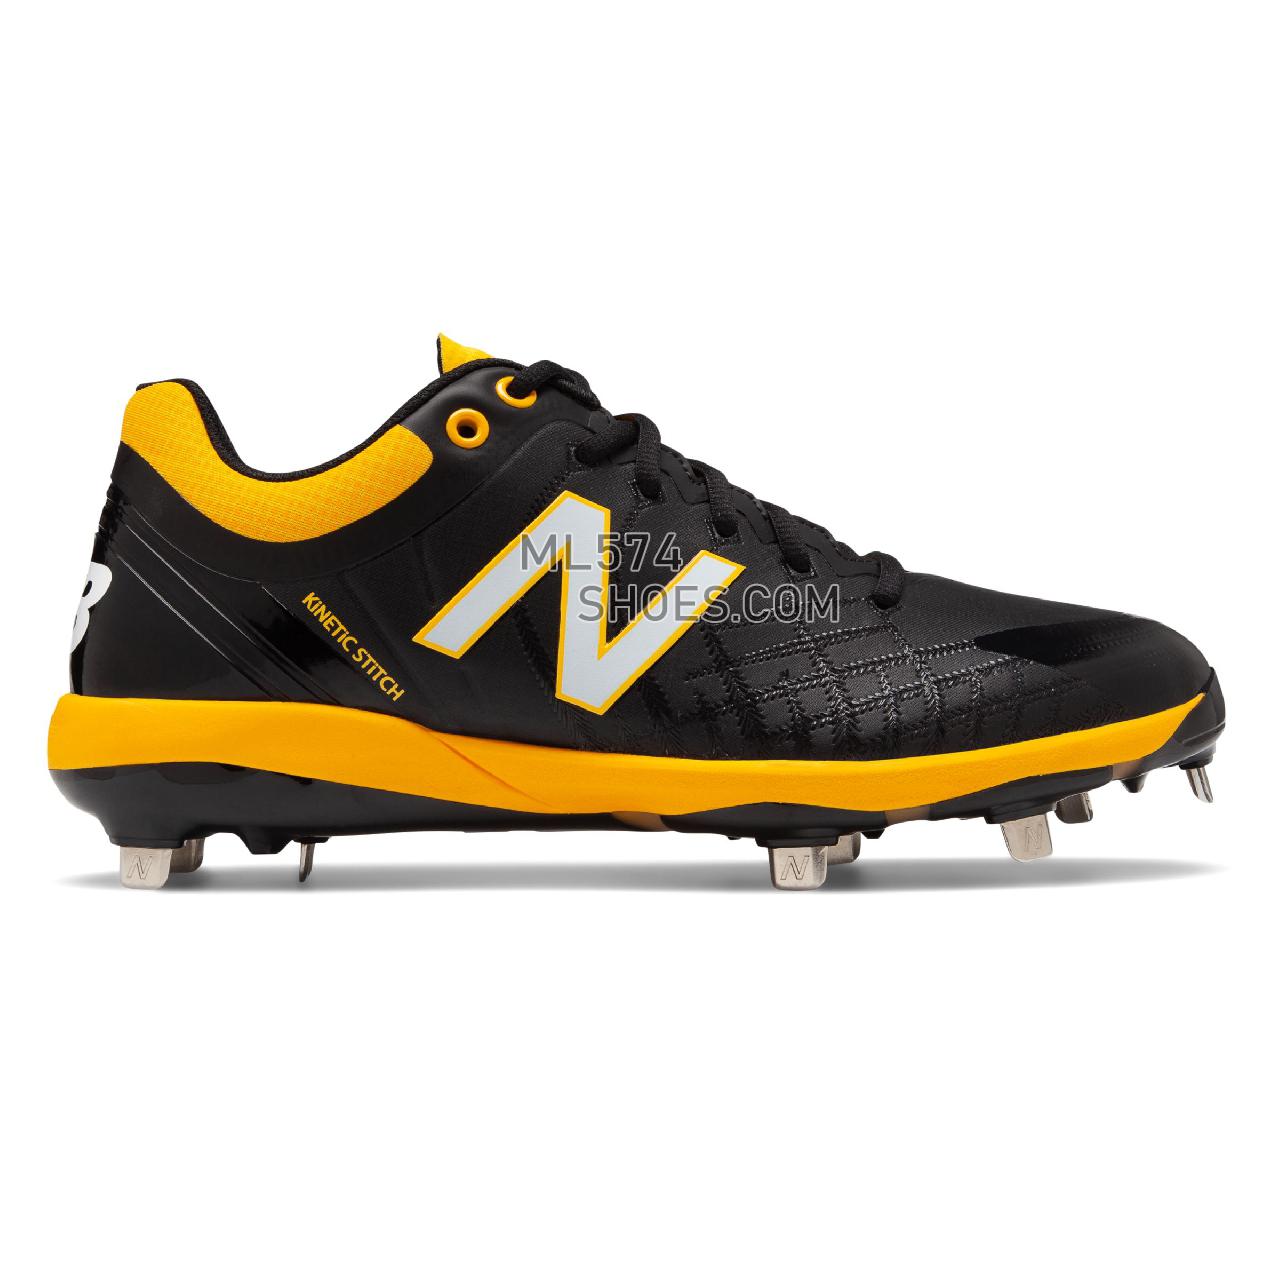 New Balance 4040v5 Metal - Men's Baseball Turf - Black with Yellow - L4040BY5